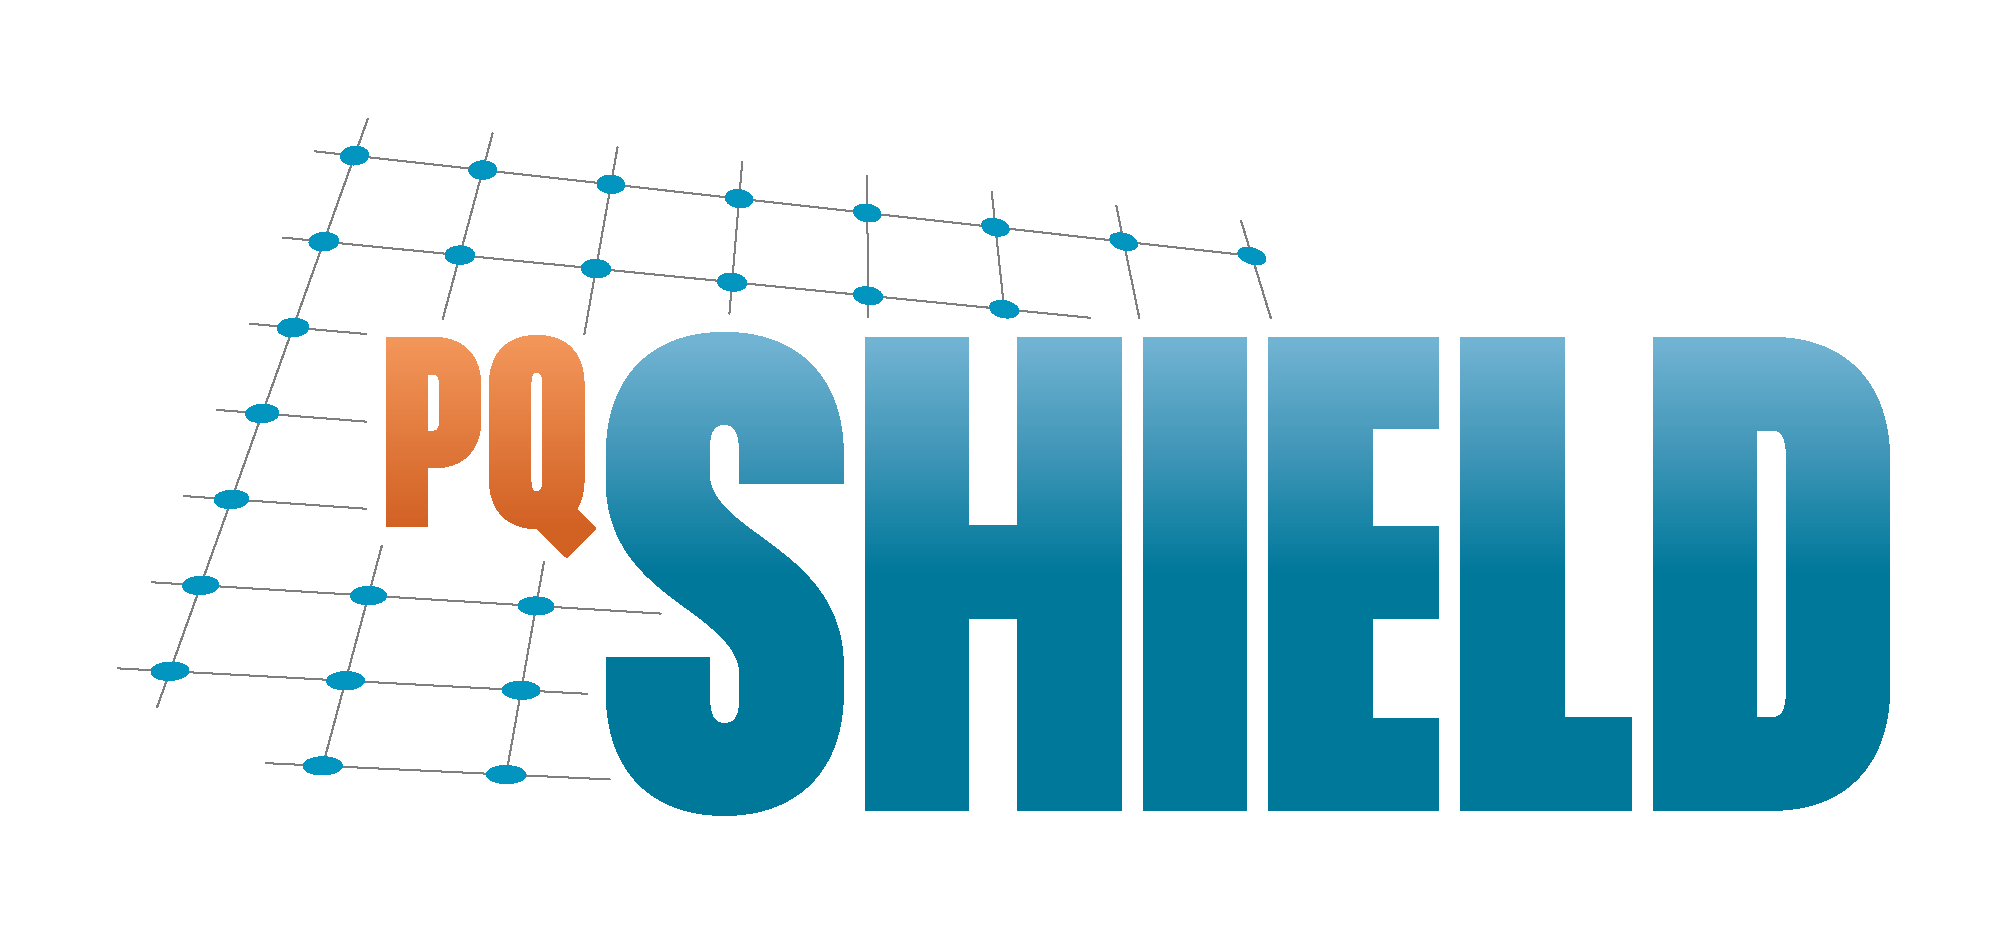 PQShield logo